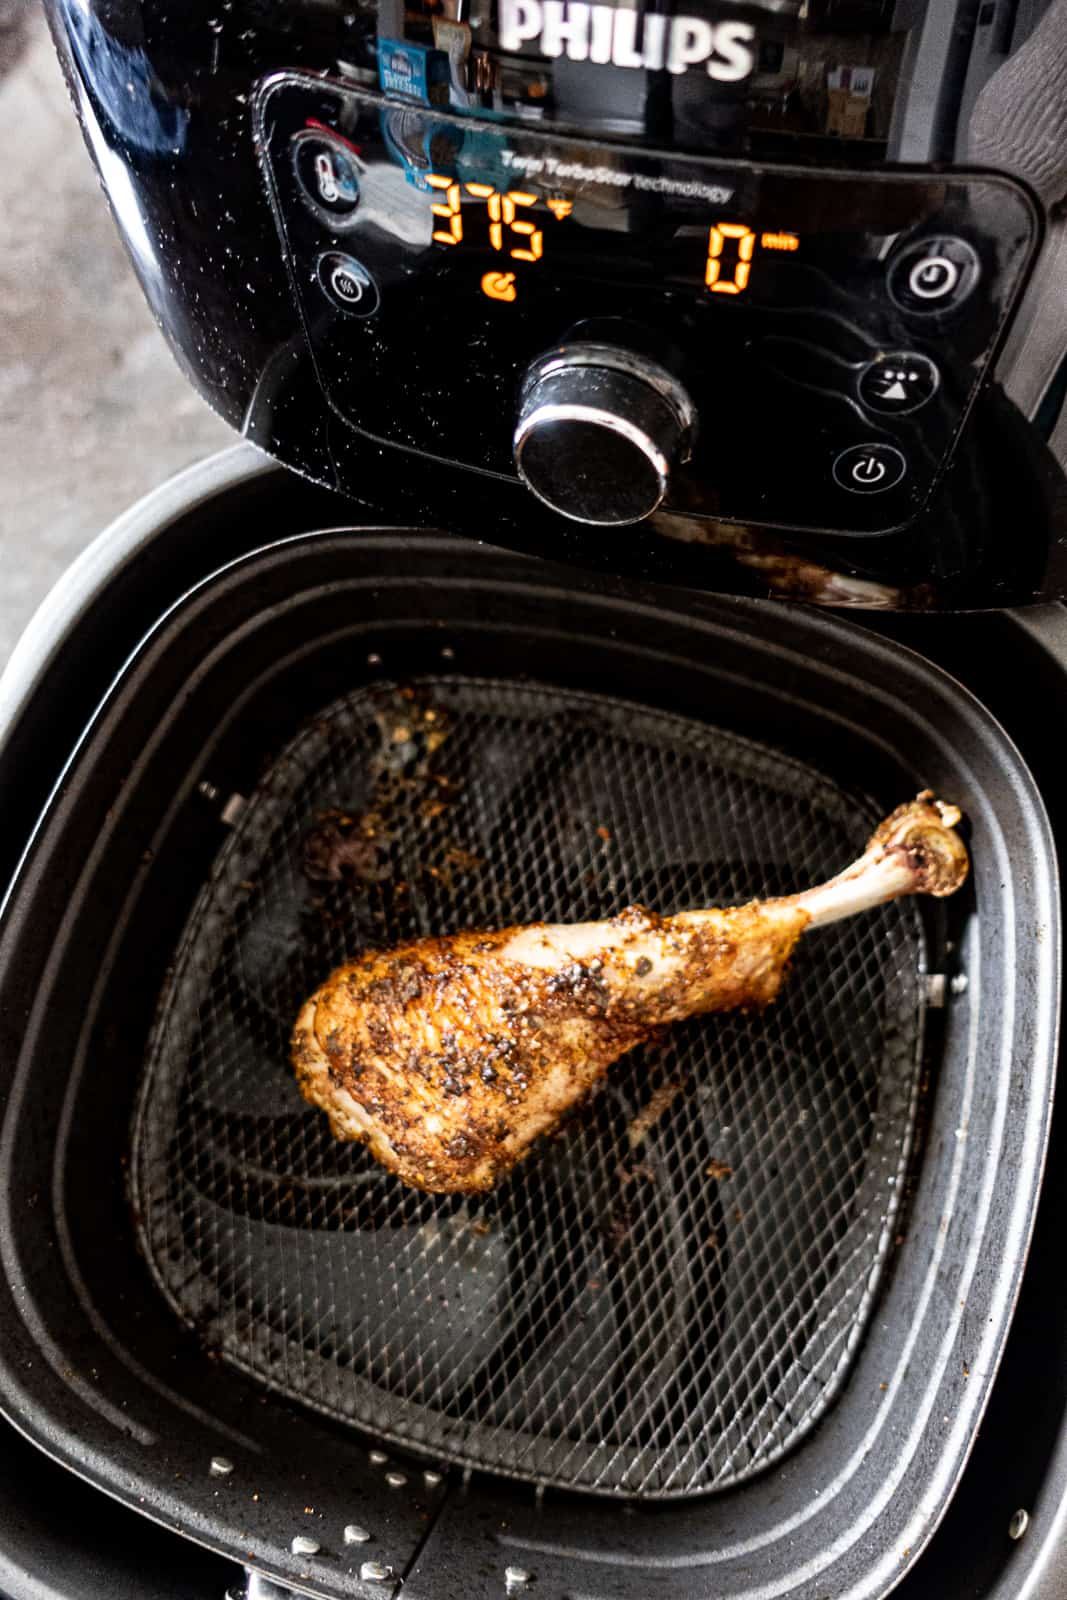 Disney Copycat Turkey Leg Air Fryer Recipe In Basket at 375 degrees F